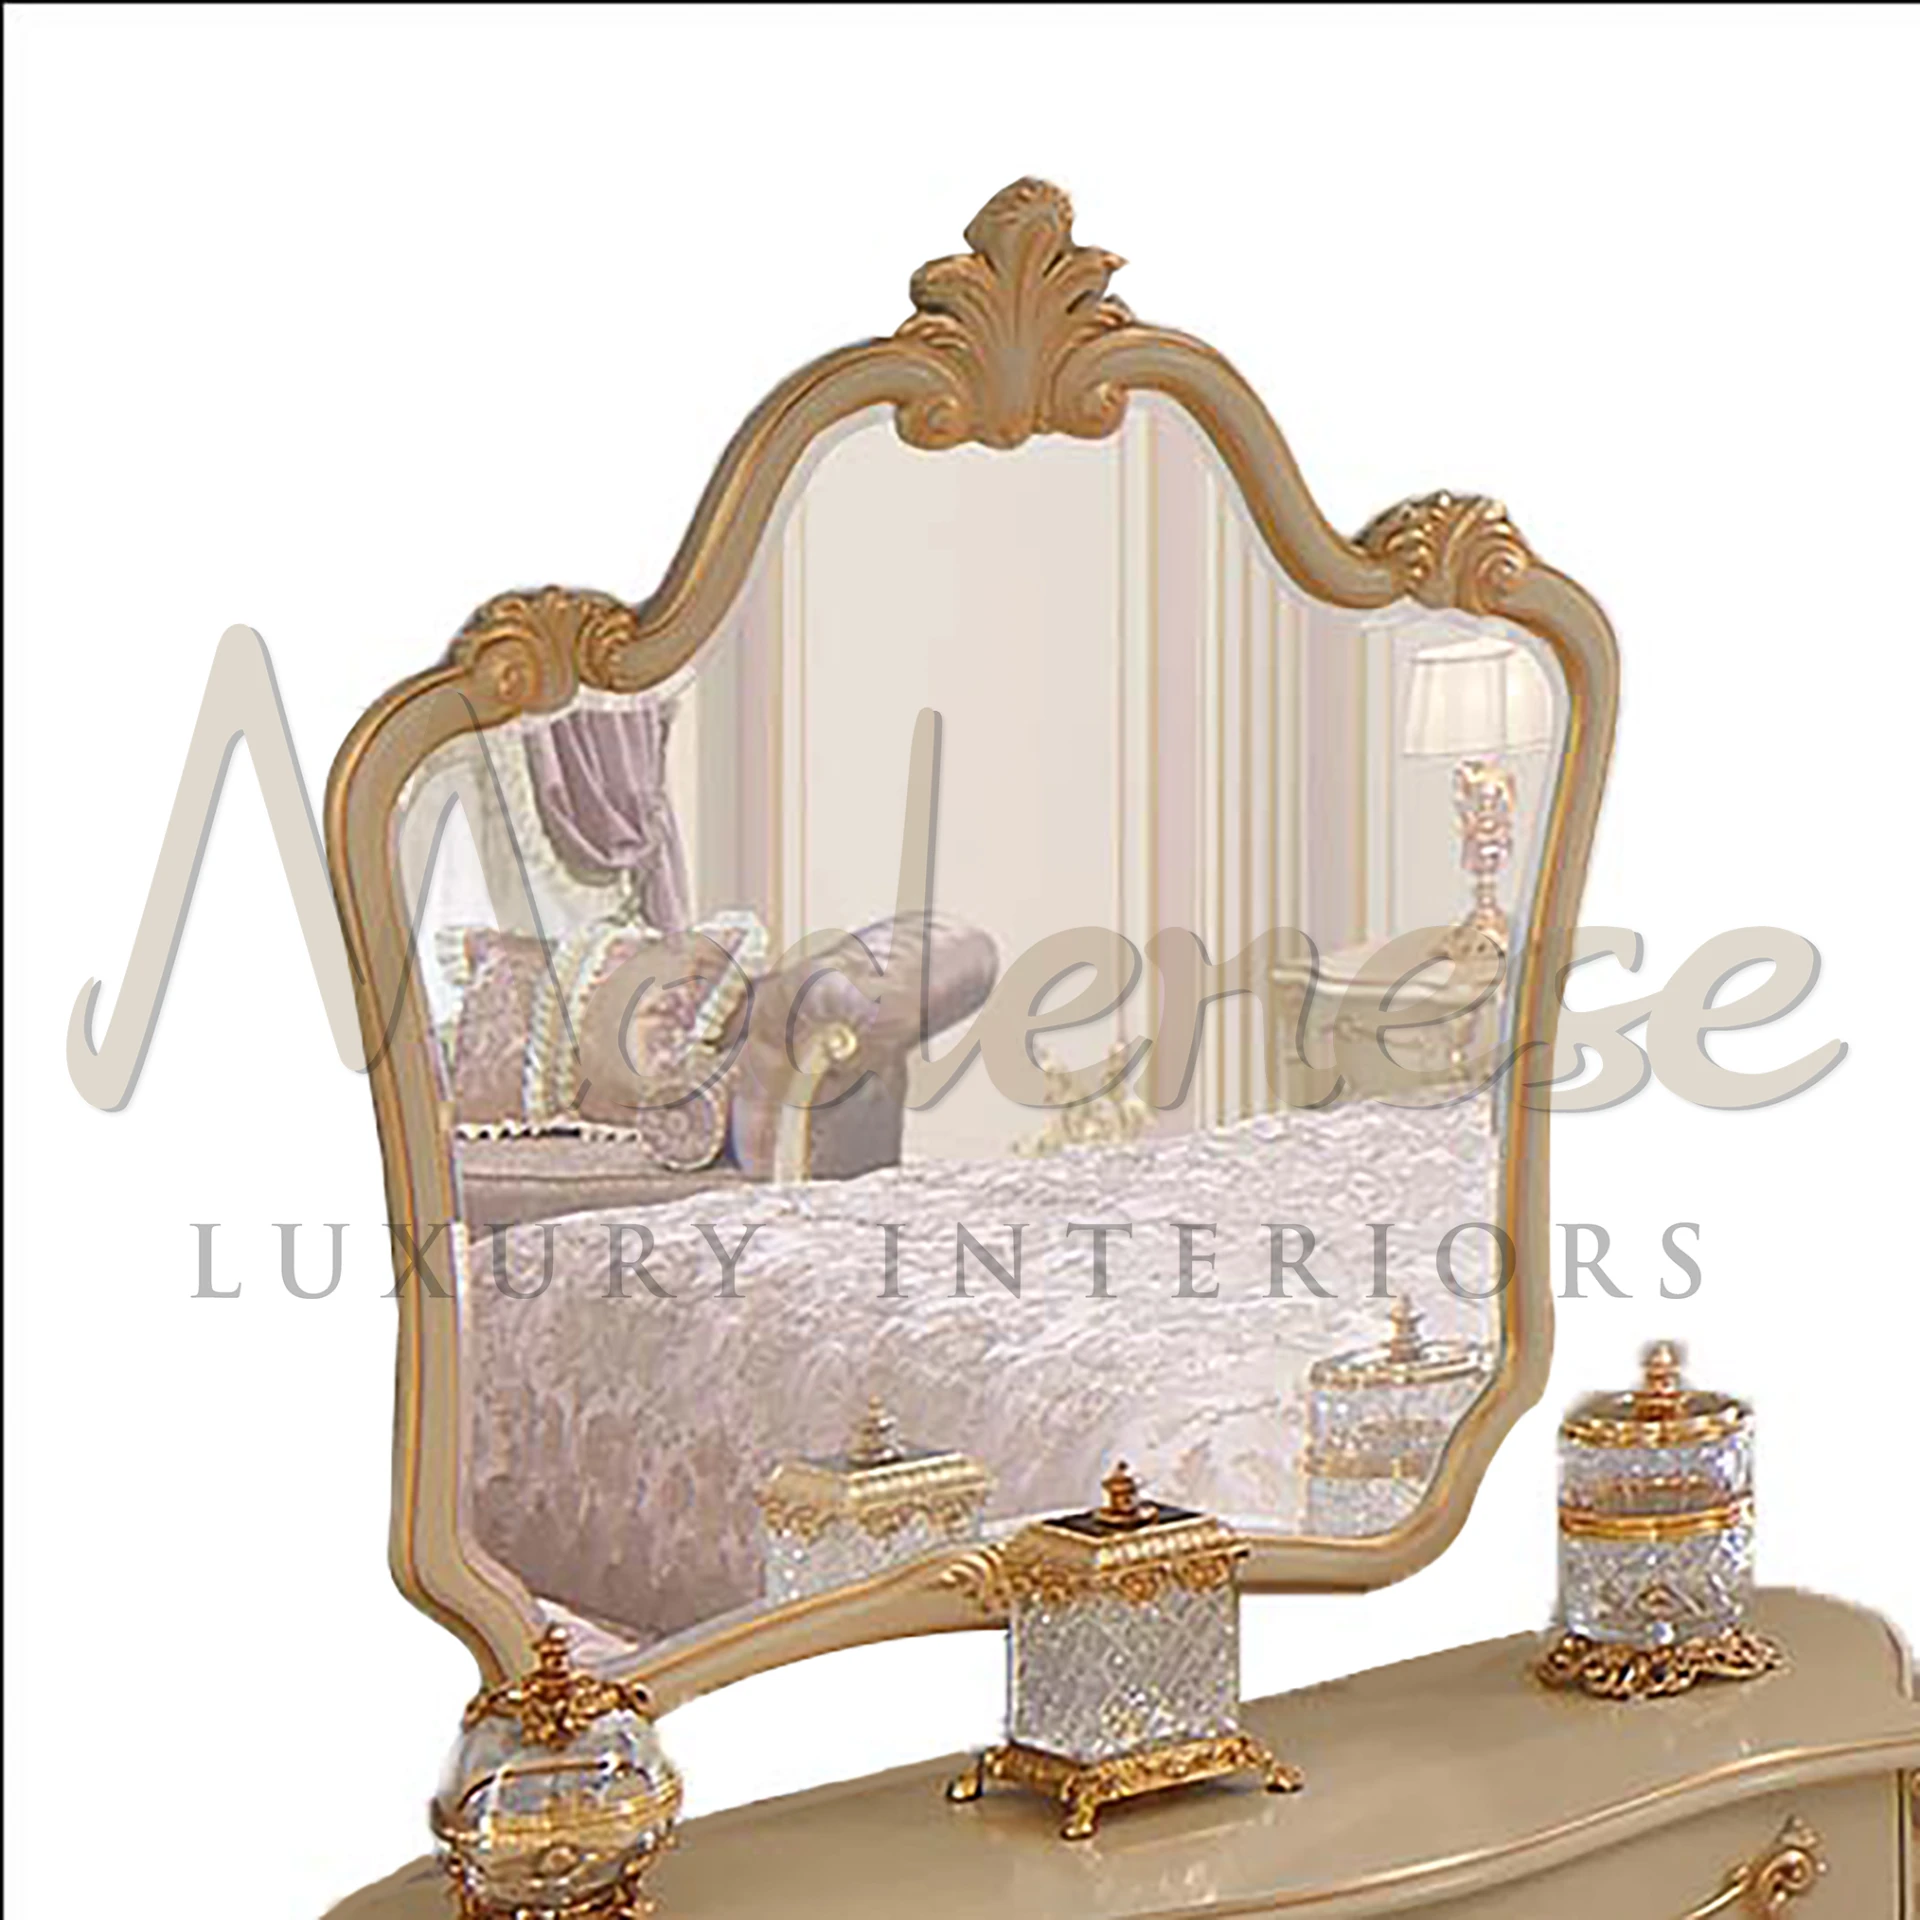 Marvelous Hand Carved Designer Mirror, a Modenese Furniture art piece, showcasing unique craftsmanship.
